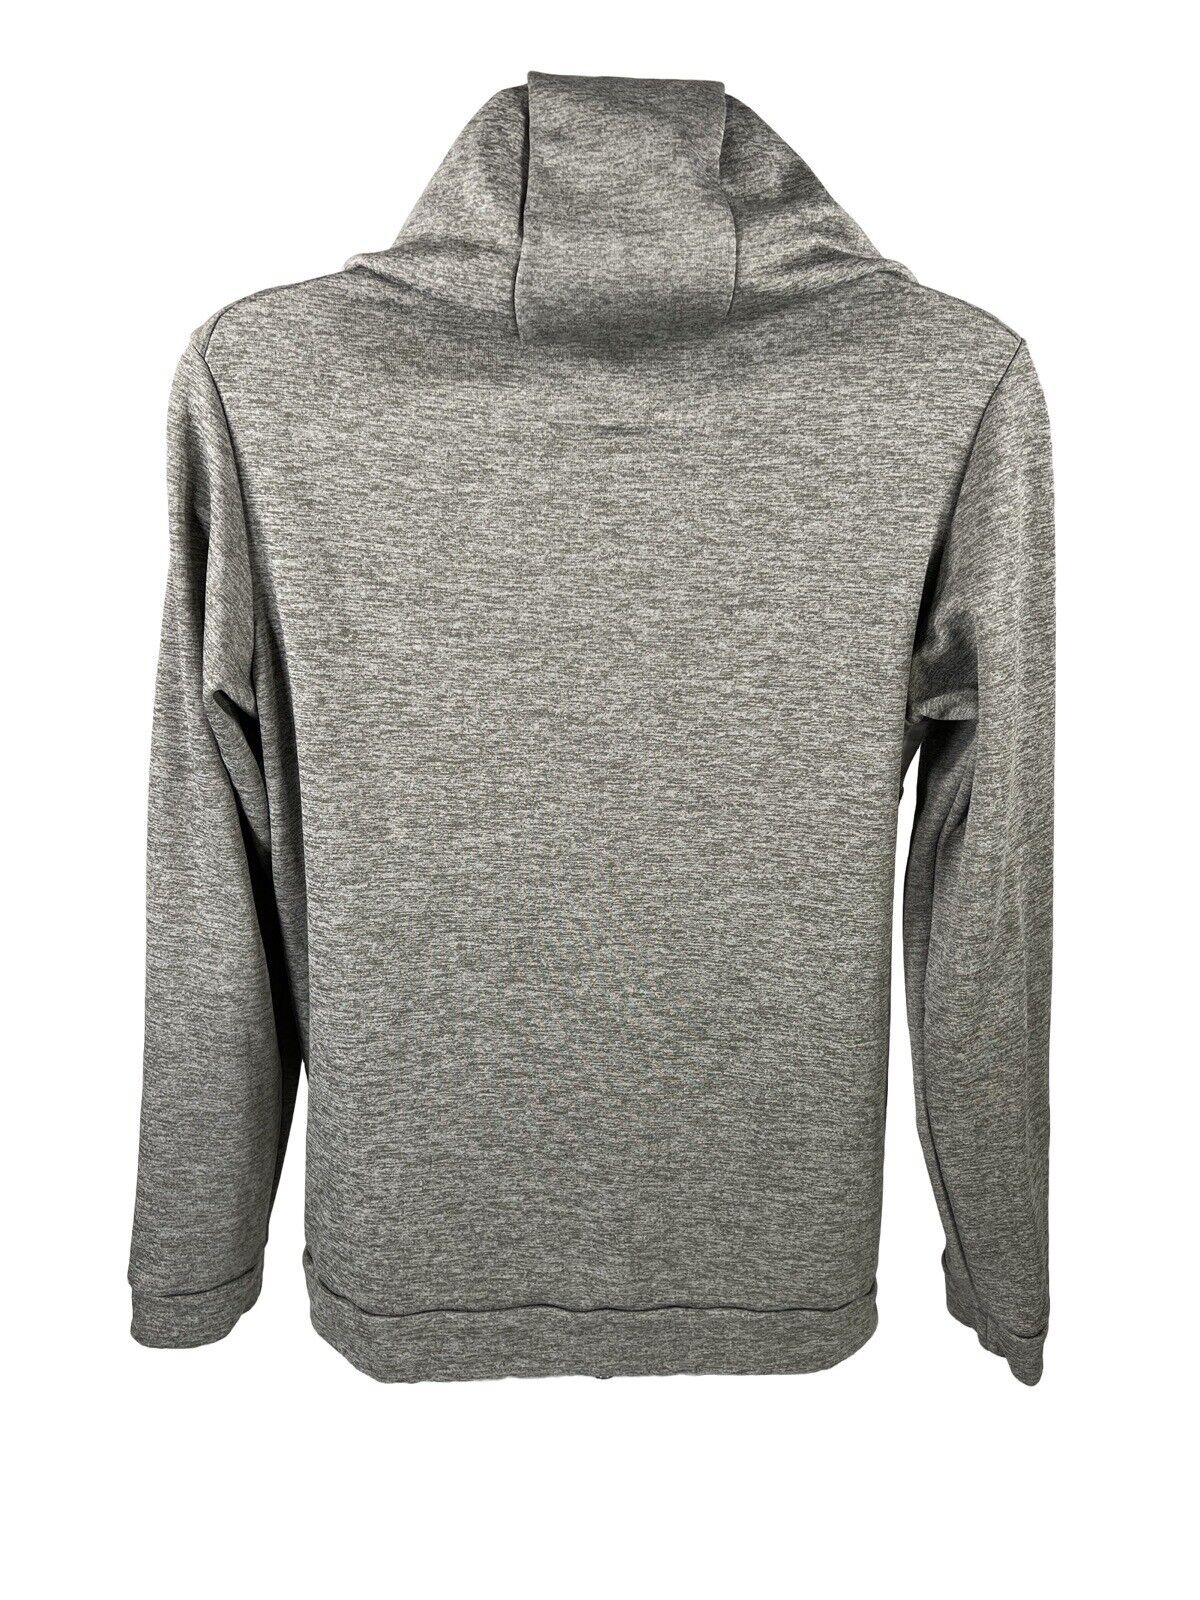 Nike Men's Gray Dri-Fit Fleece Lined Pullover Hoodie - M